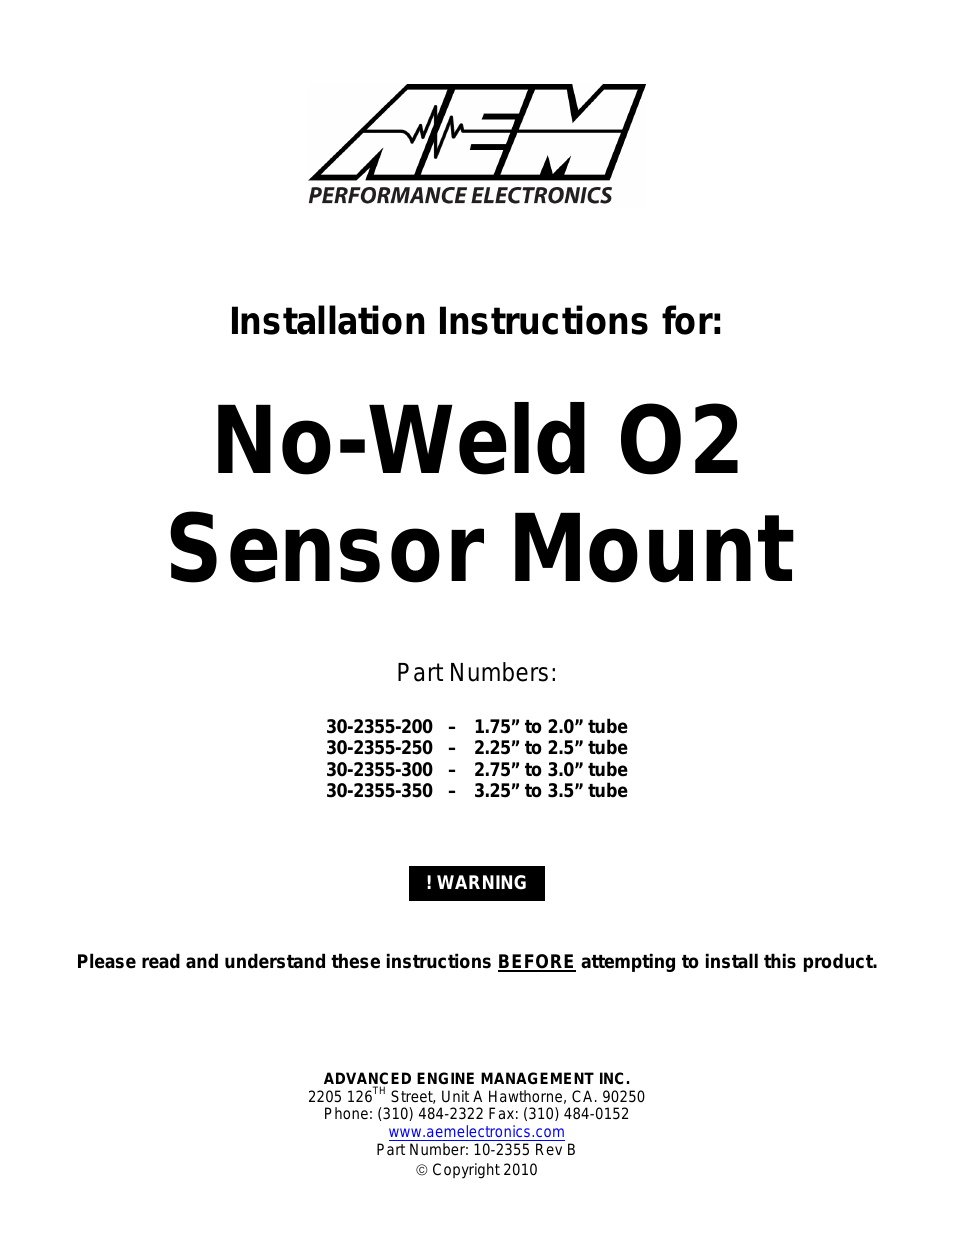 30-2355-XXX No-Weld O2 Sensor Mount